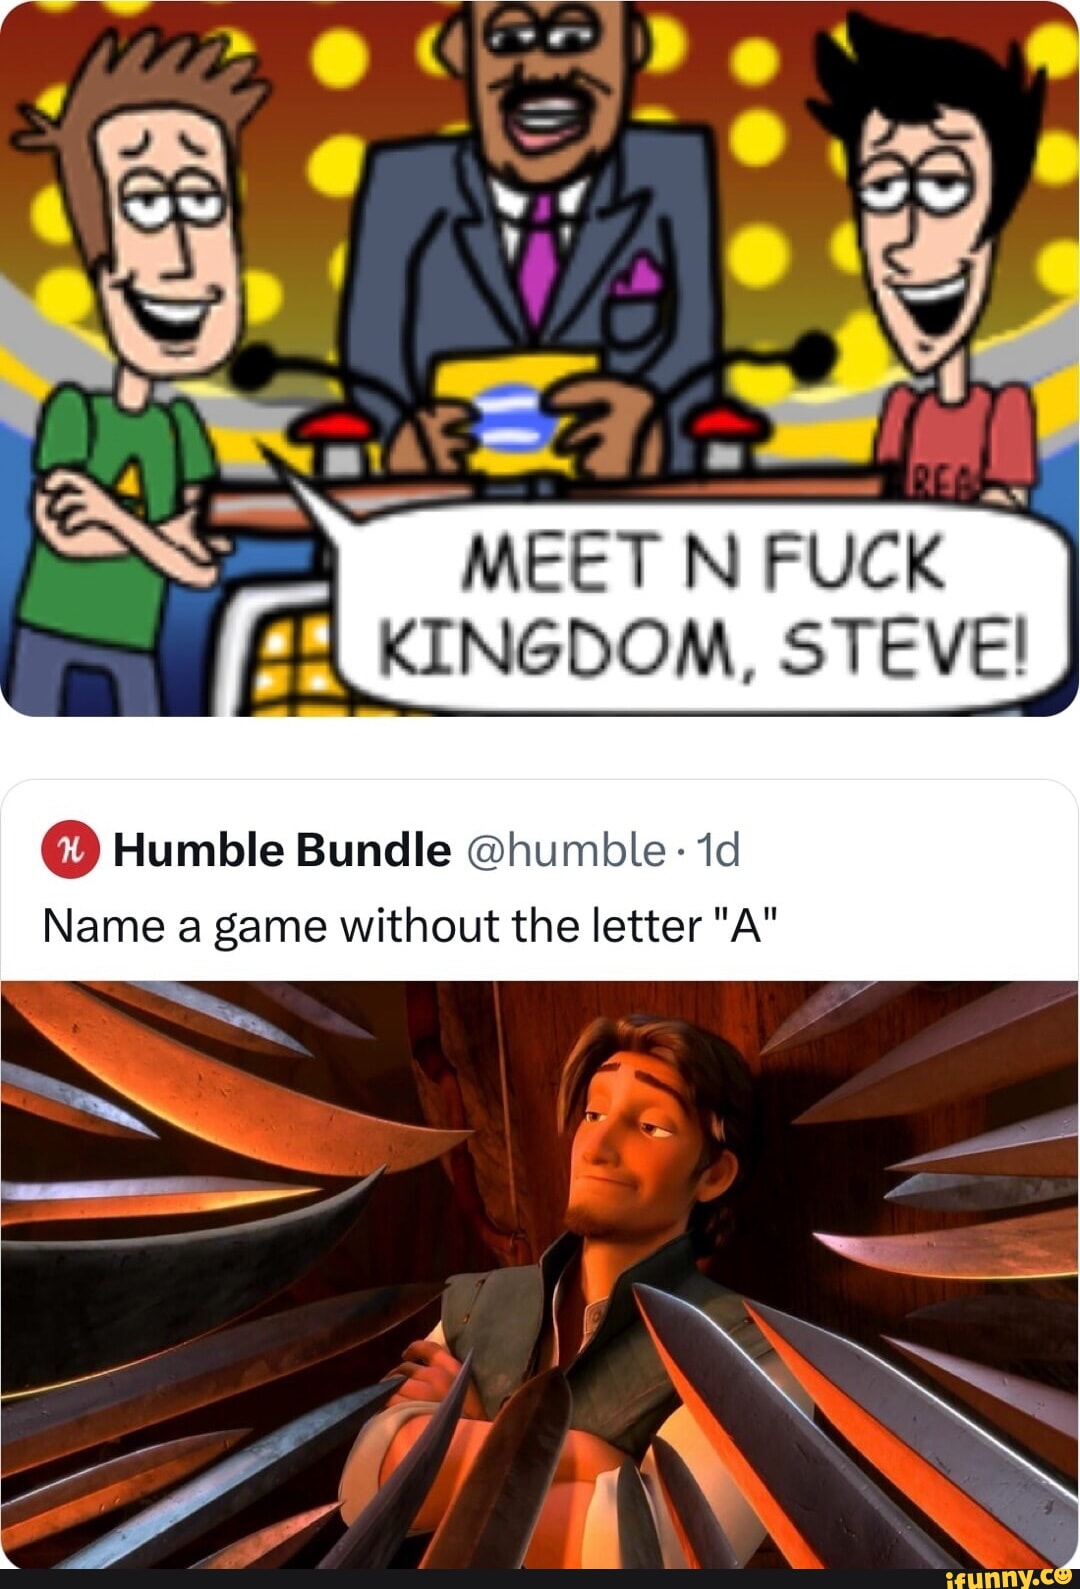 Meet and fuck kingdom steve